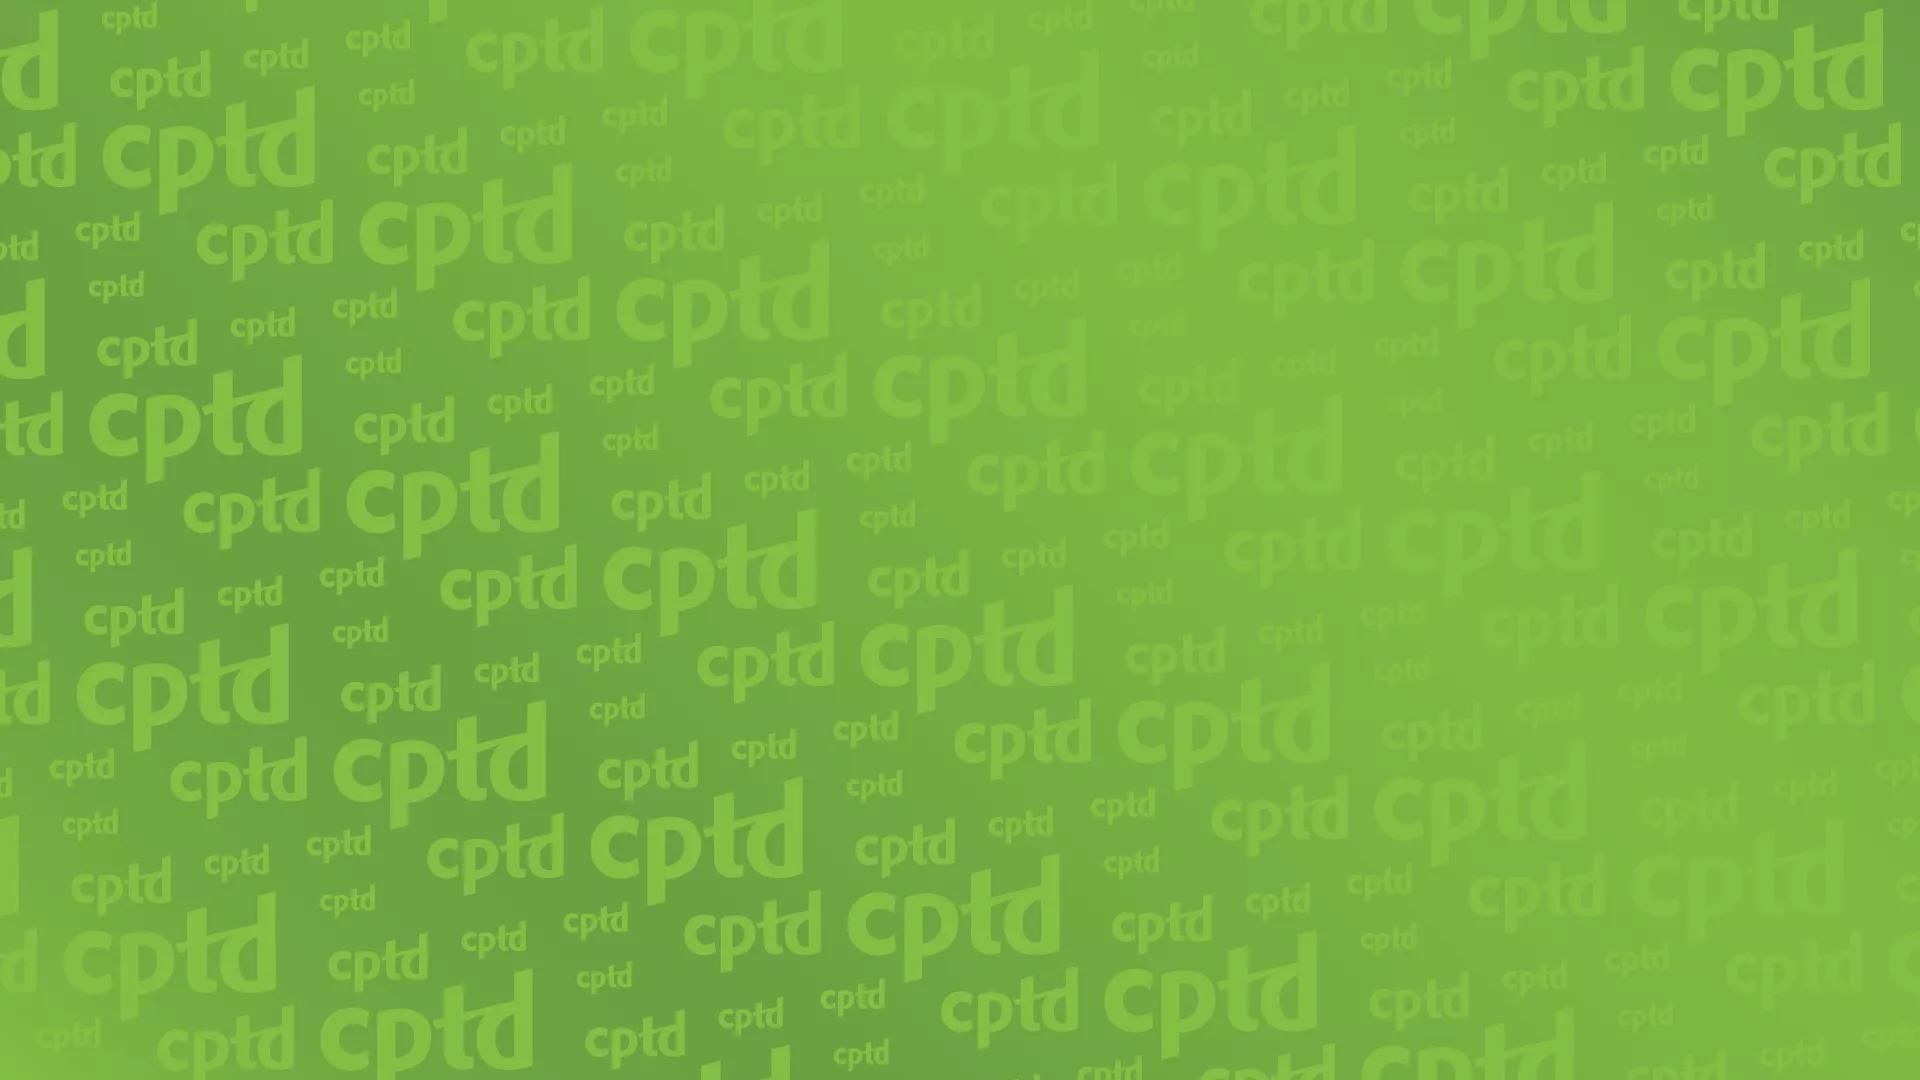 CI-CPTD-DigitalBackground-TiledAPTD